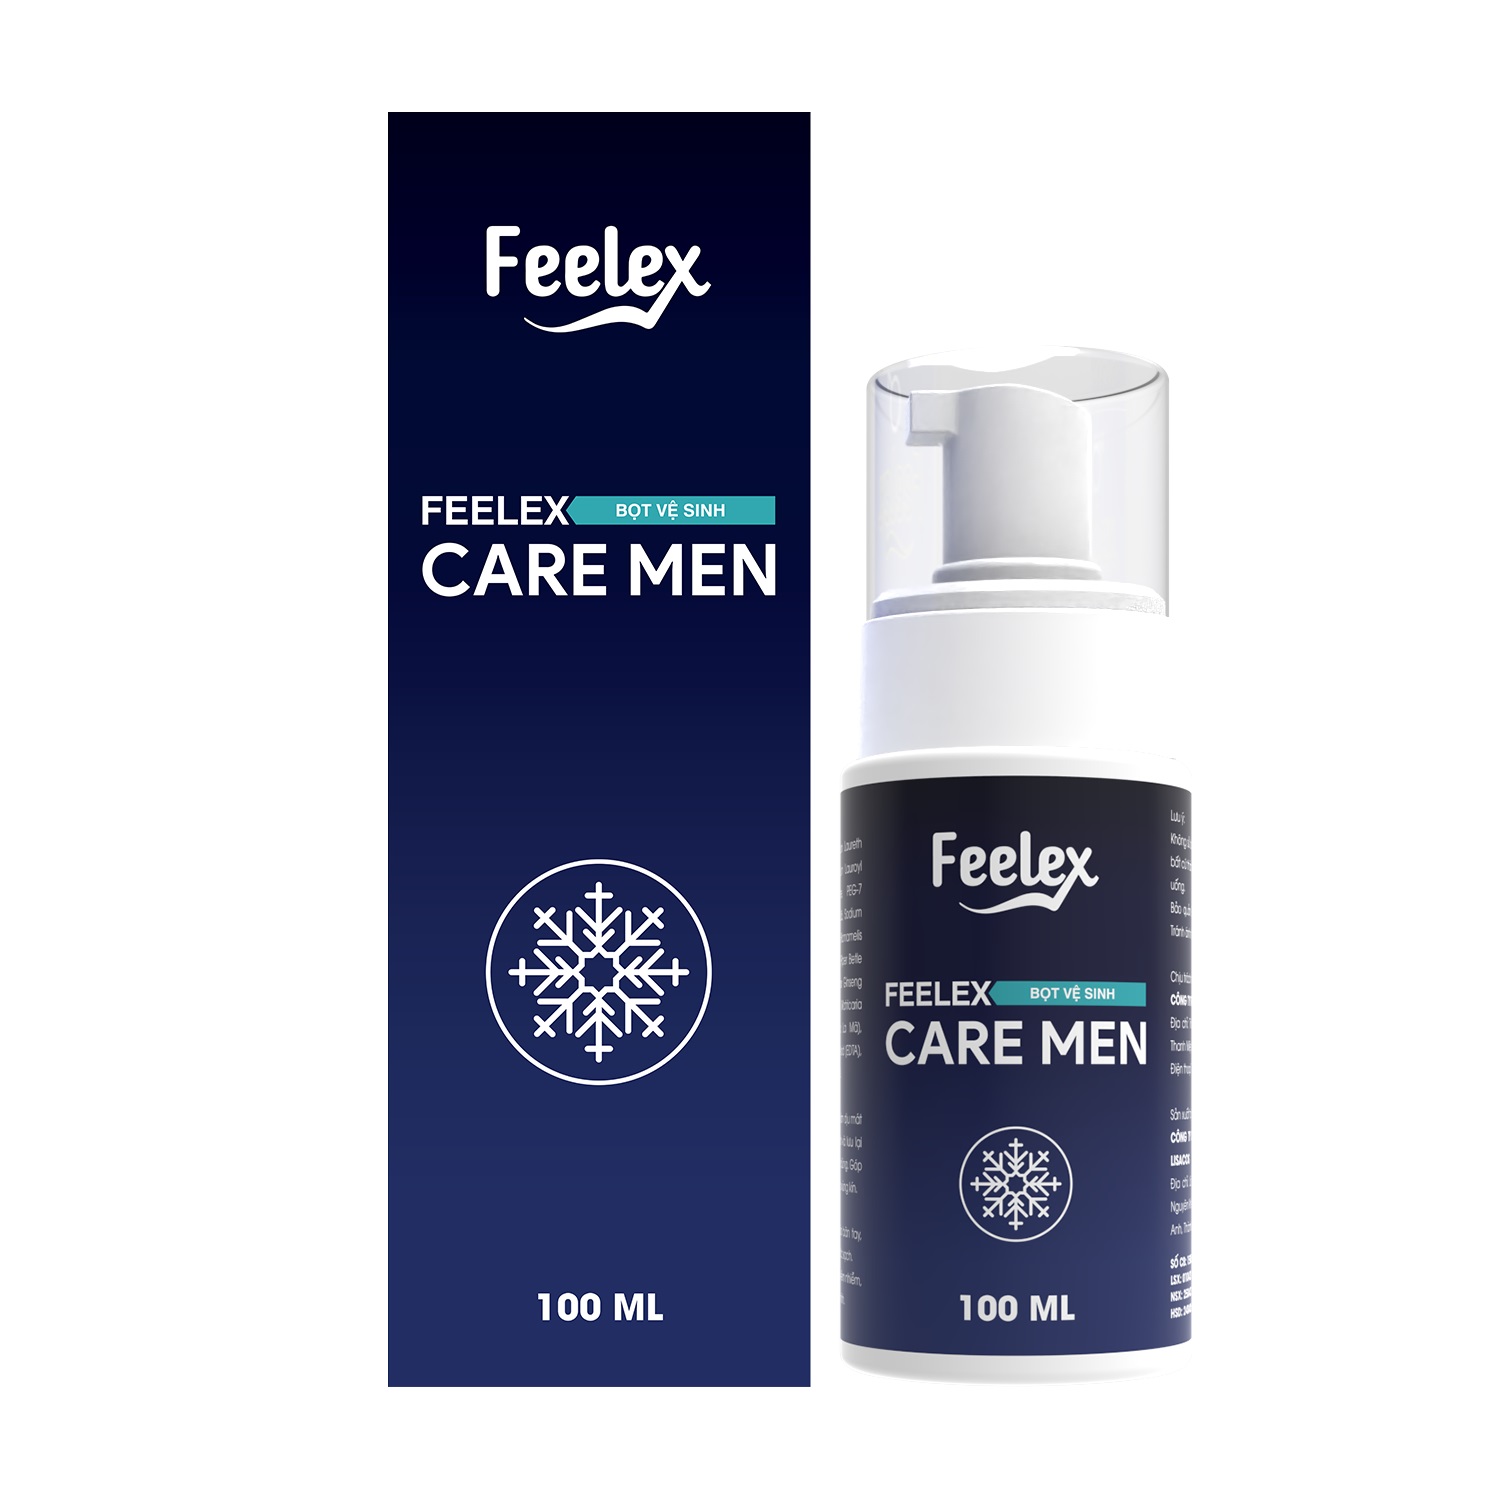 feelex care men